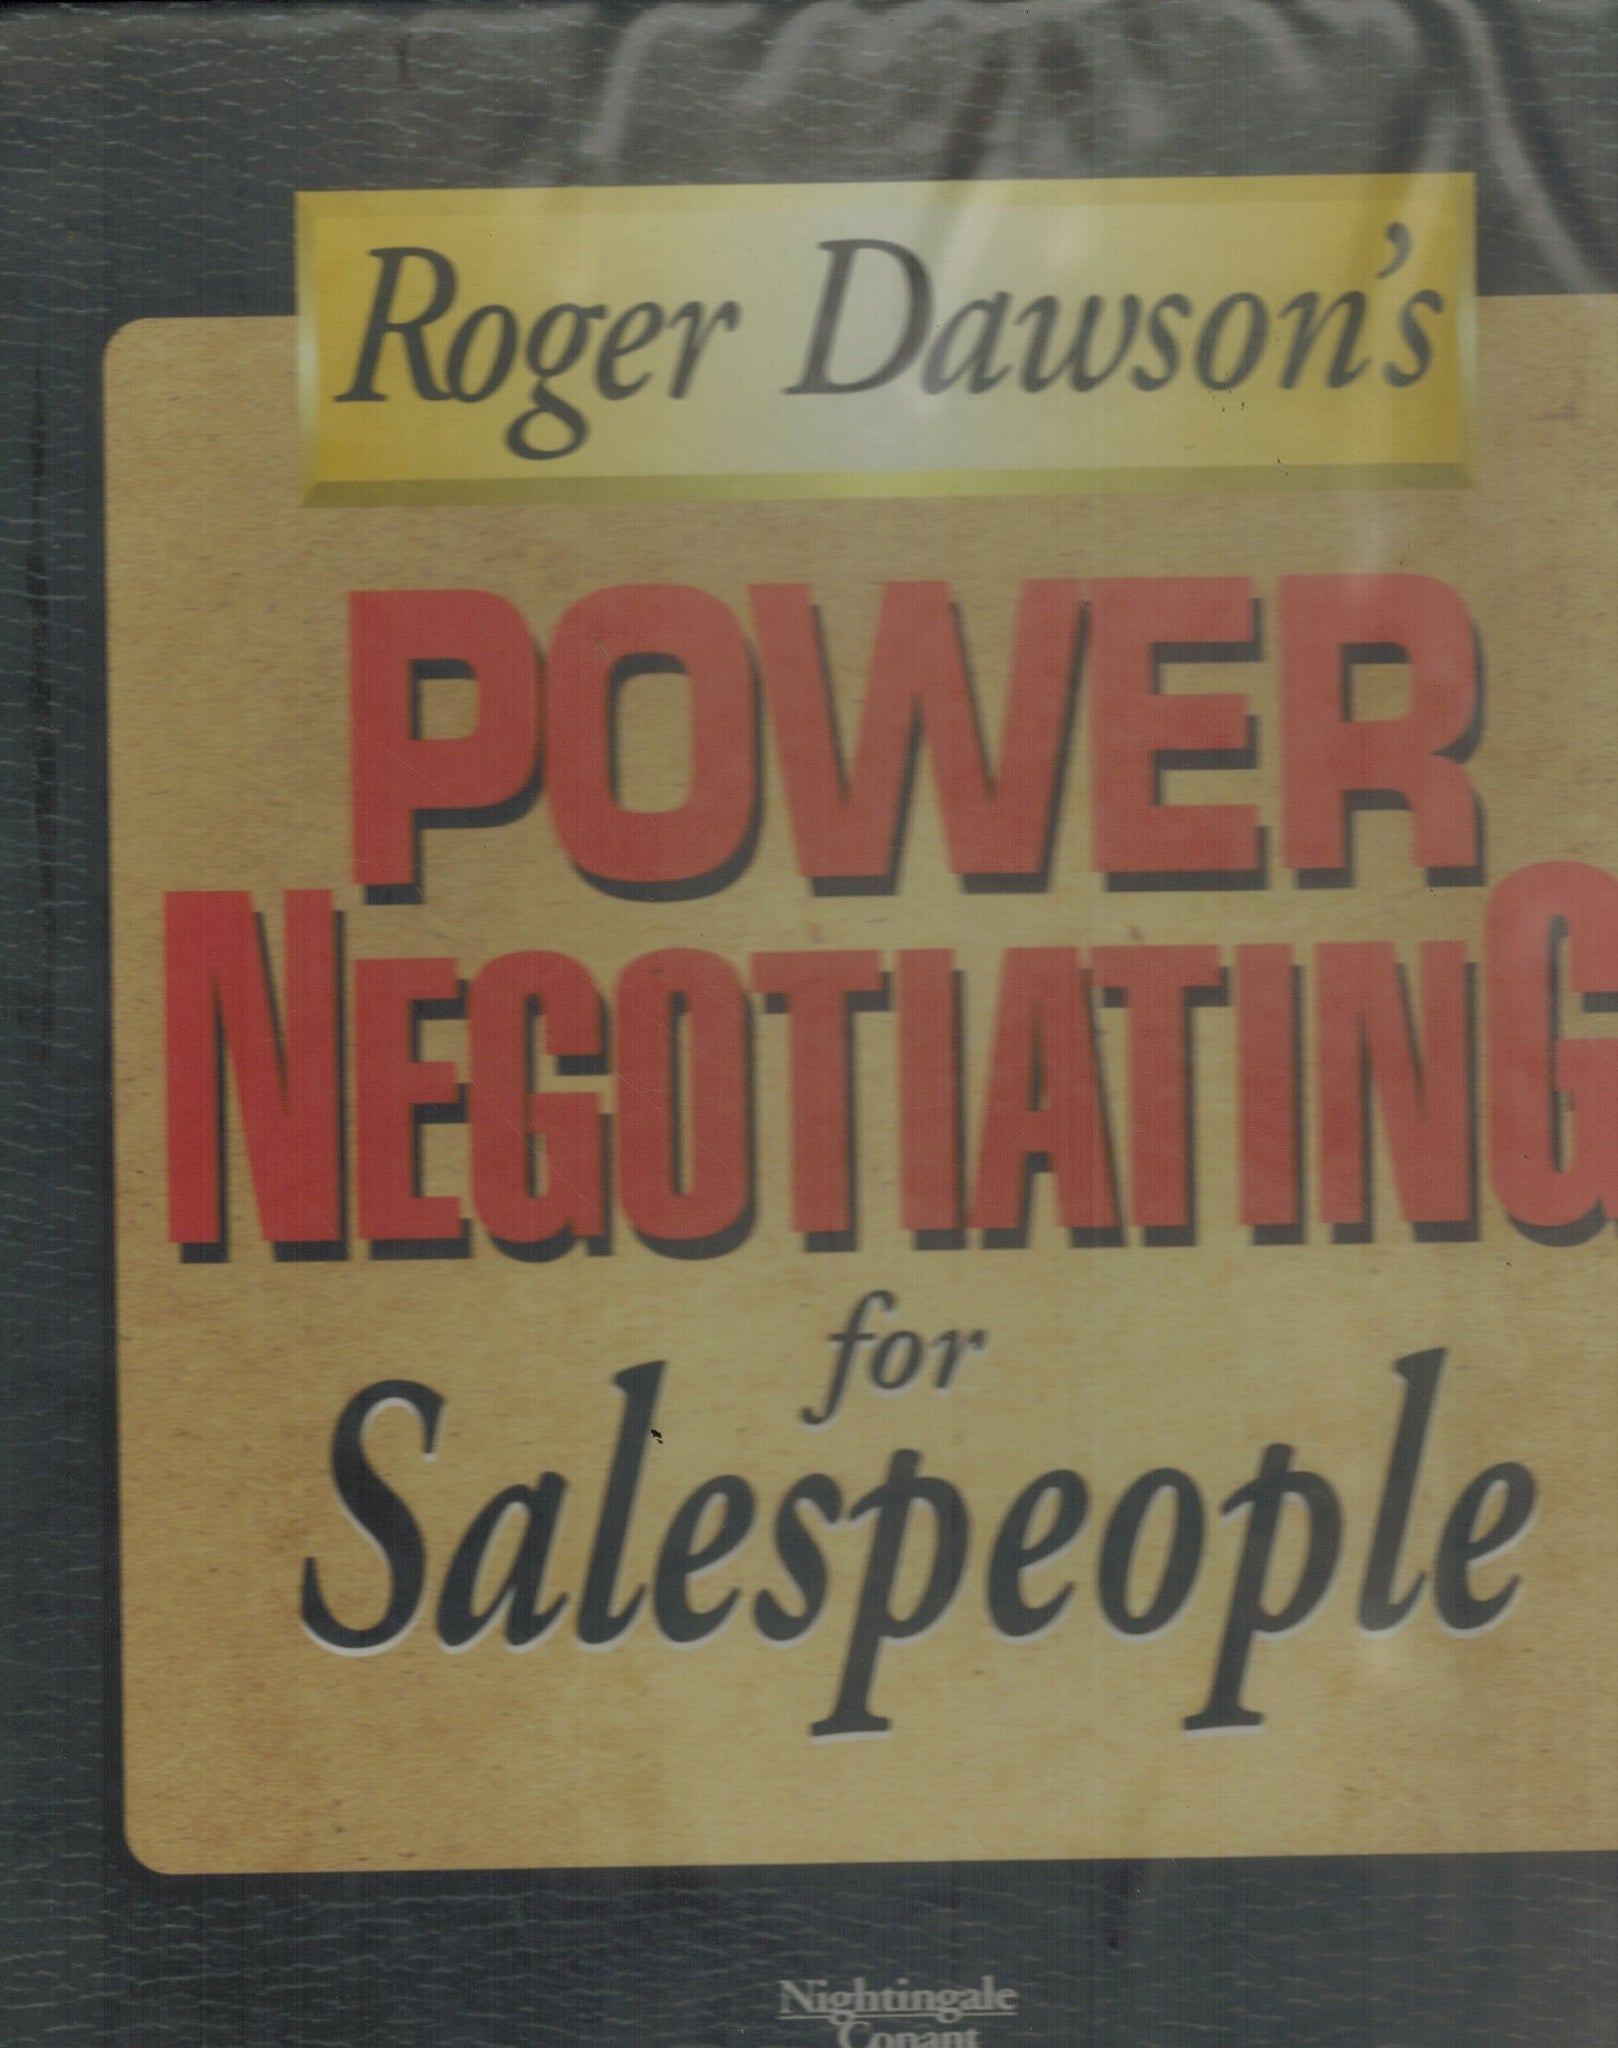 ROGER DAWSONS POWER NEGOTIATING FOR SALESPEOPLE - PROGRAM ON CASSETTE TAPE - books-new